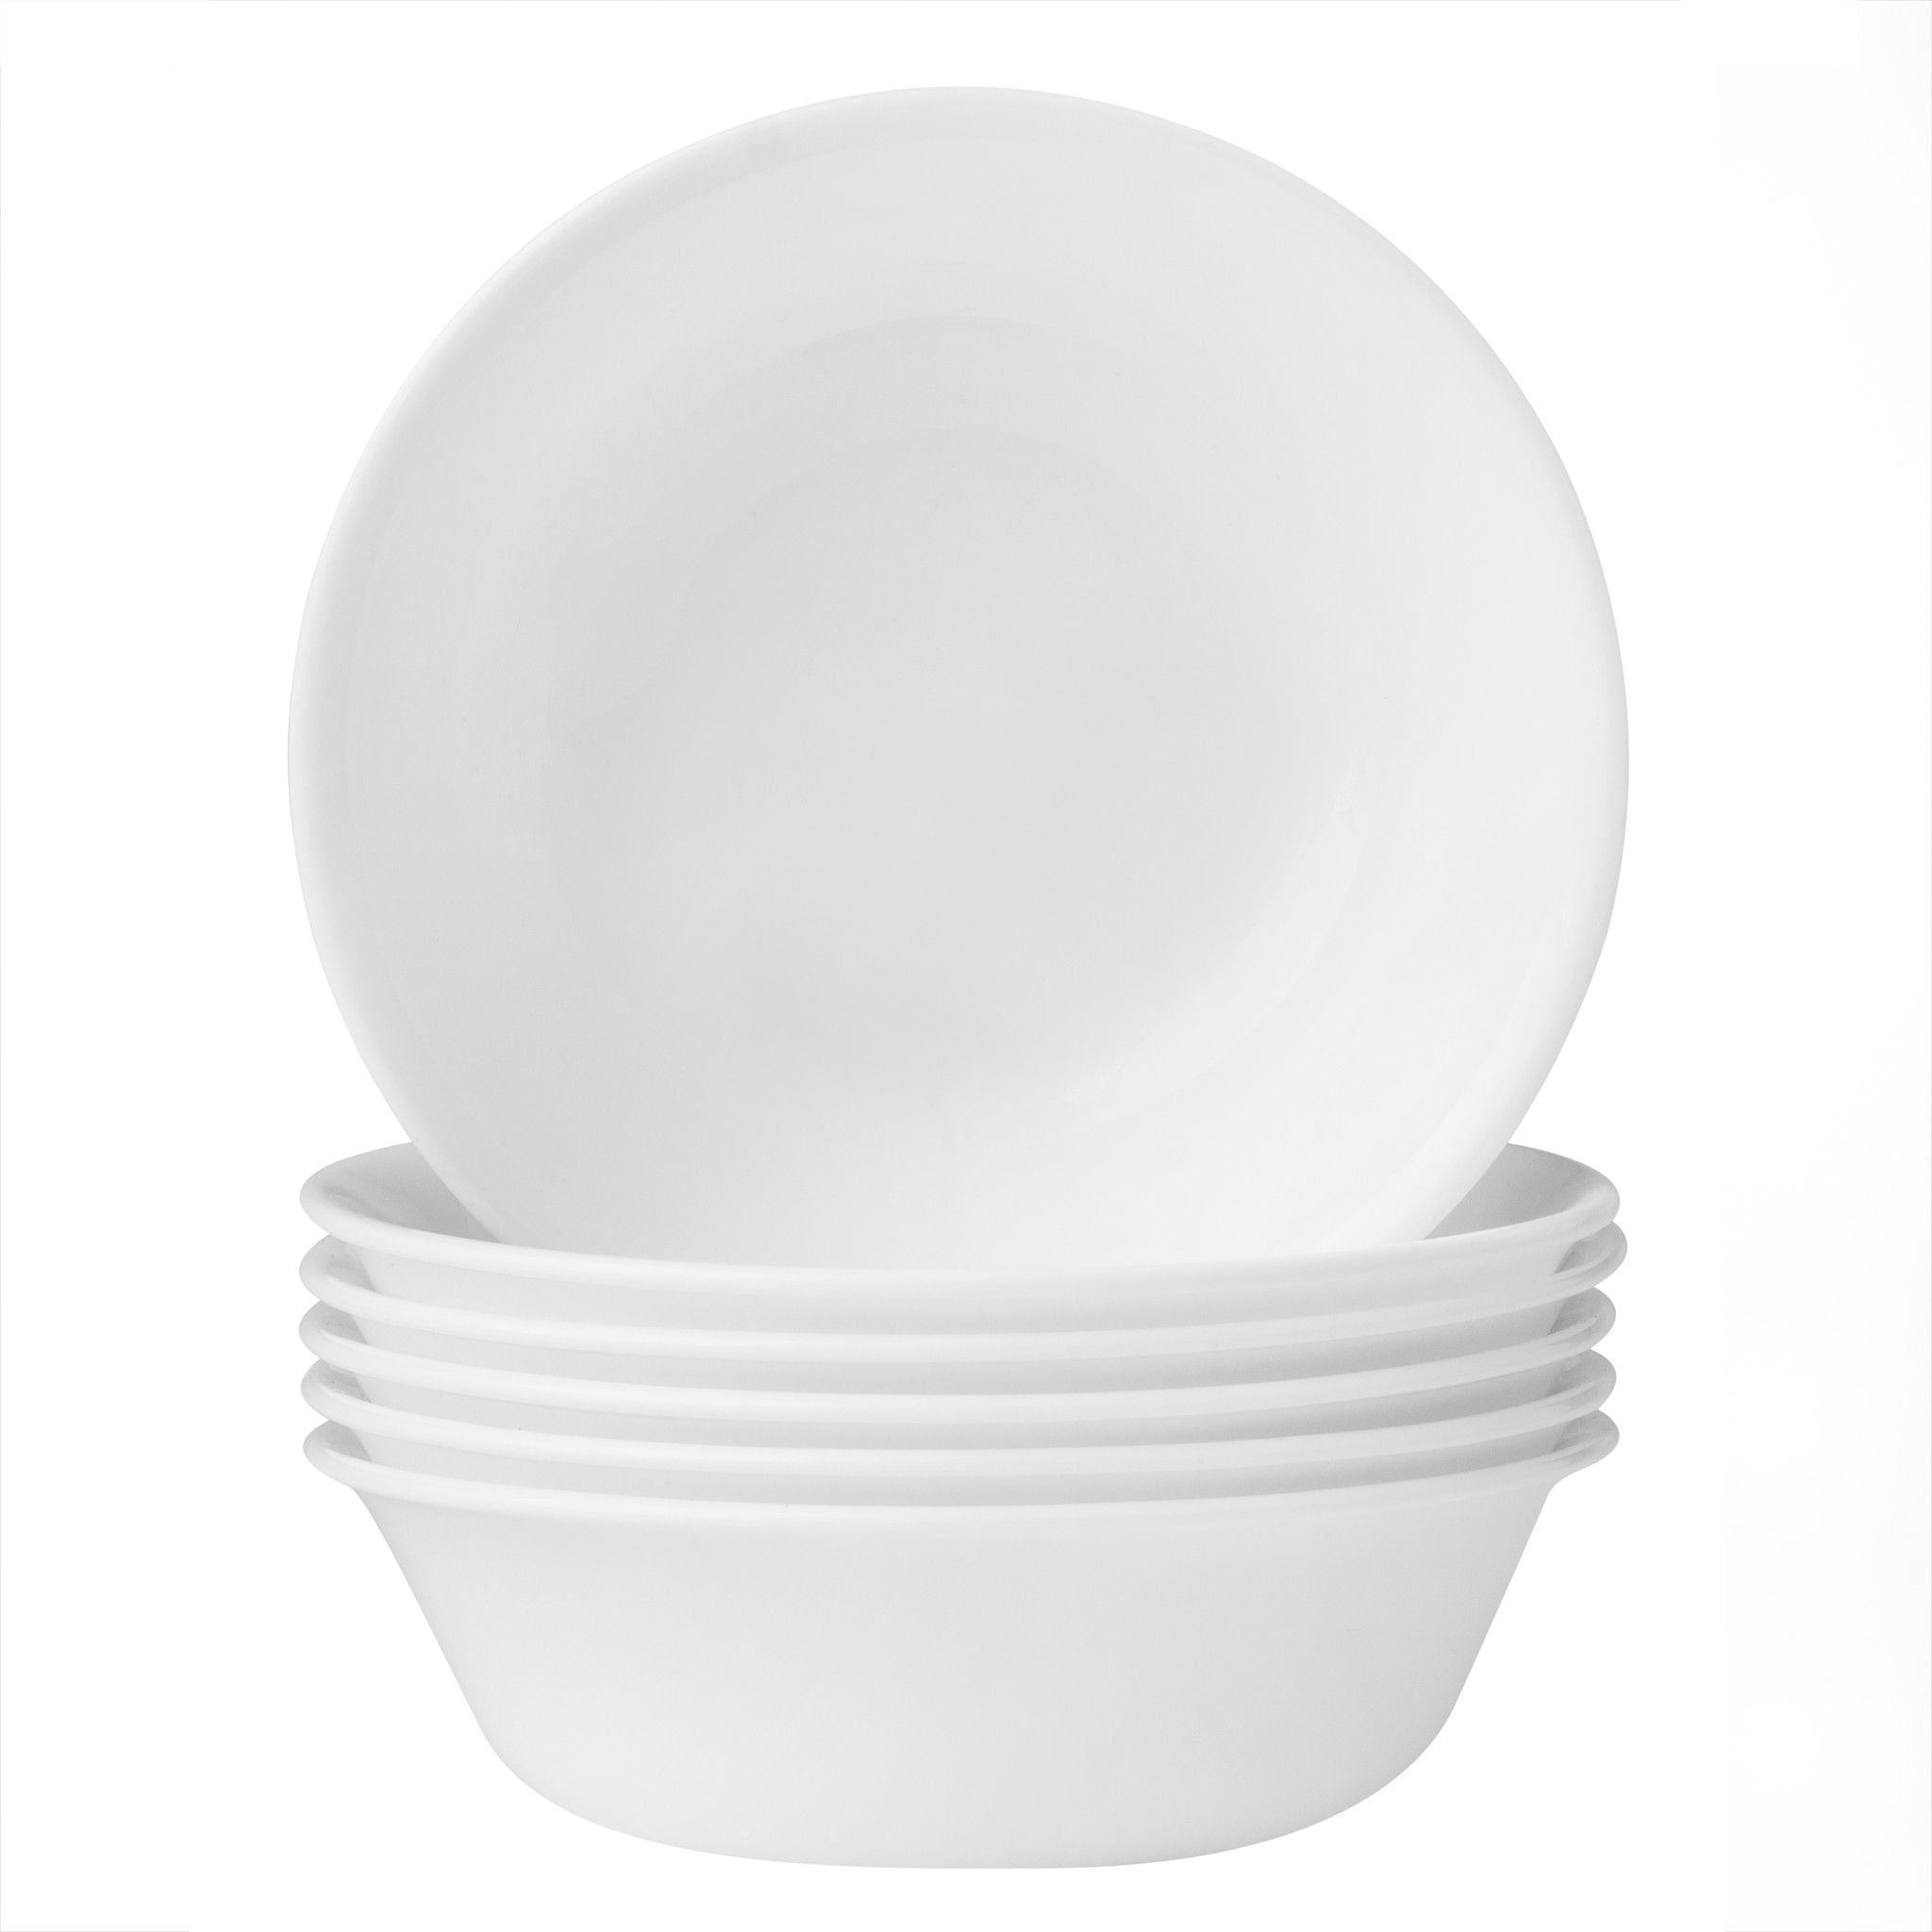 2, White WORLD KITCHEN 6017639 Corelle Livingware 20-Ounce Salad/Pasta Bowl Winter Frost White 